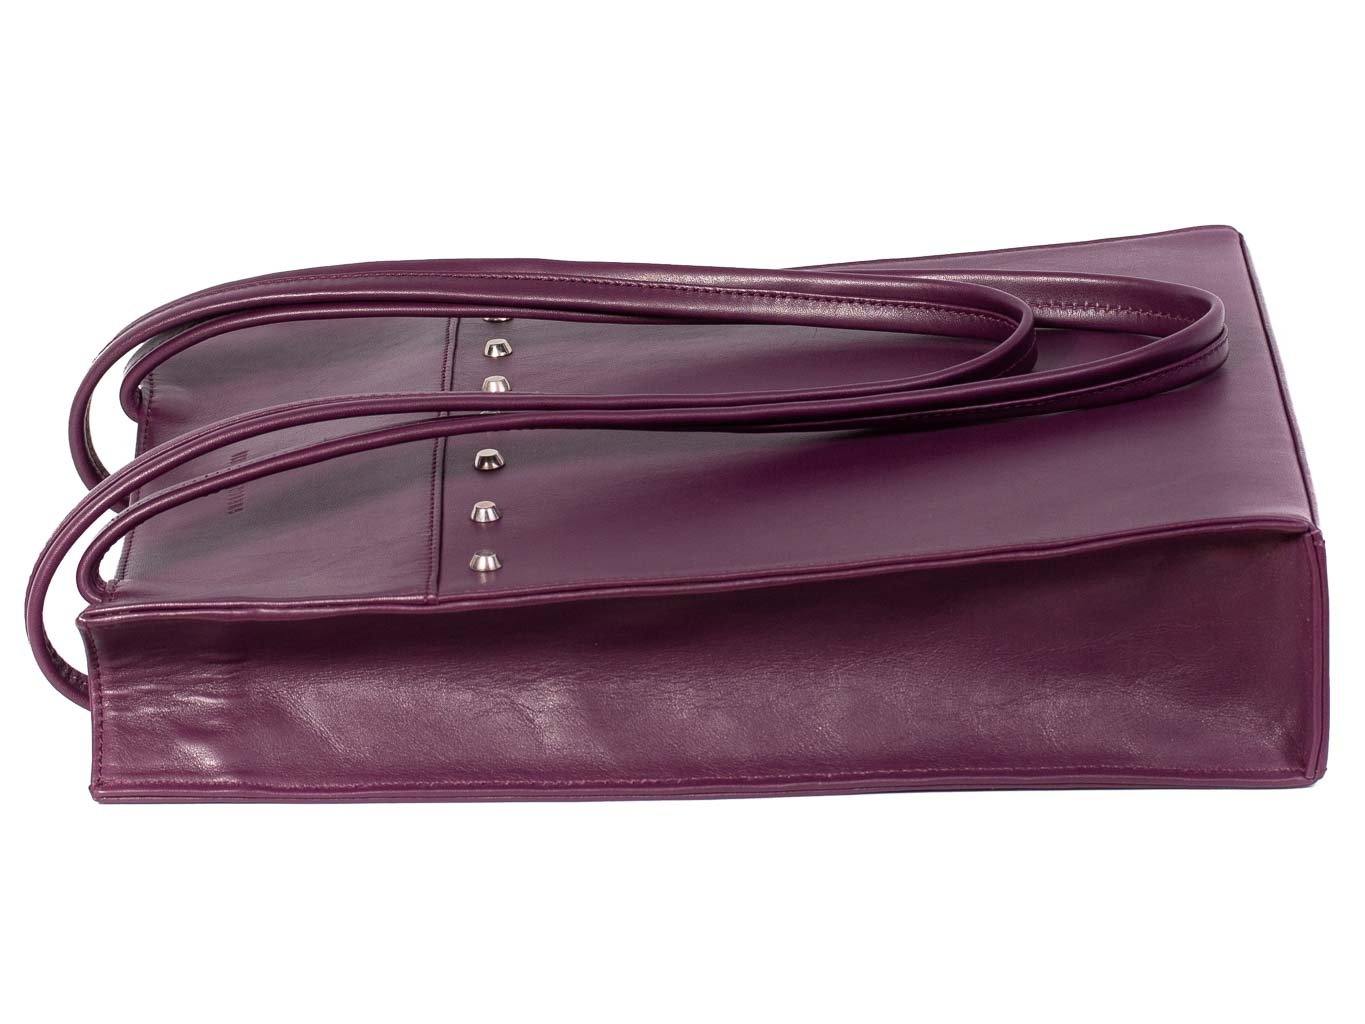 Tote Studded Handbag in Deep Purple by Sherene Melinda side